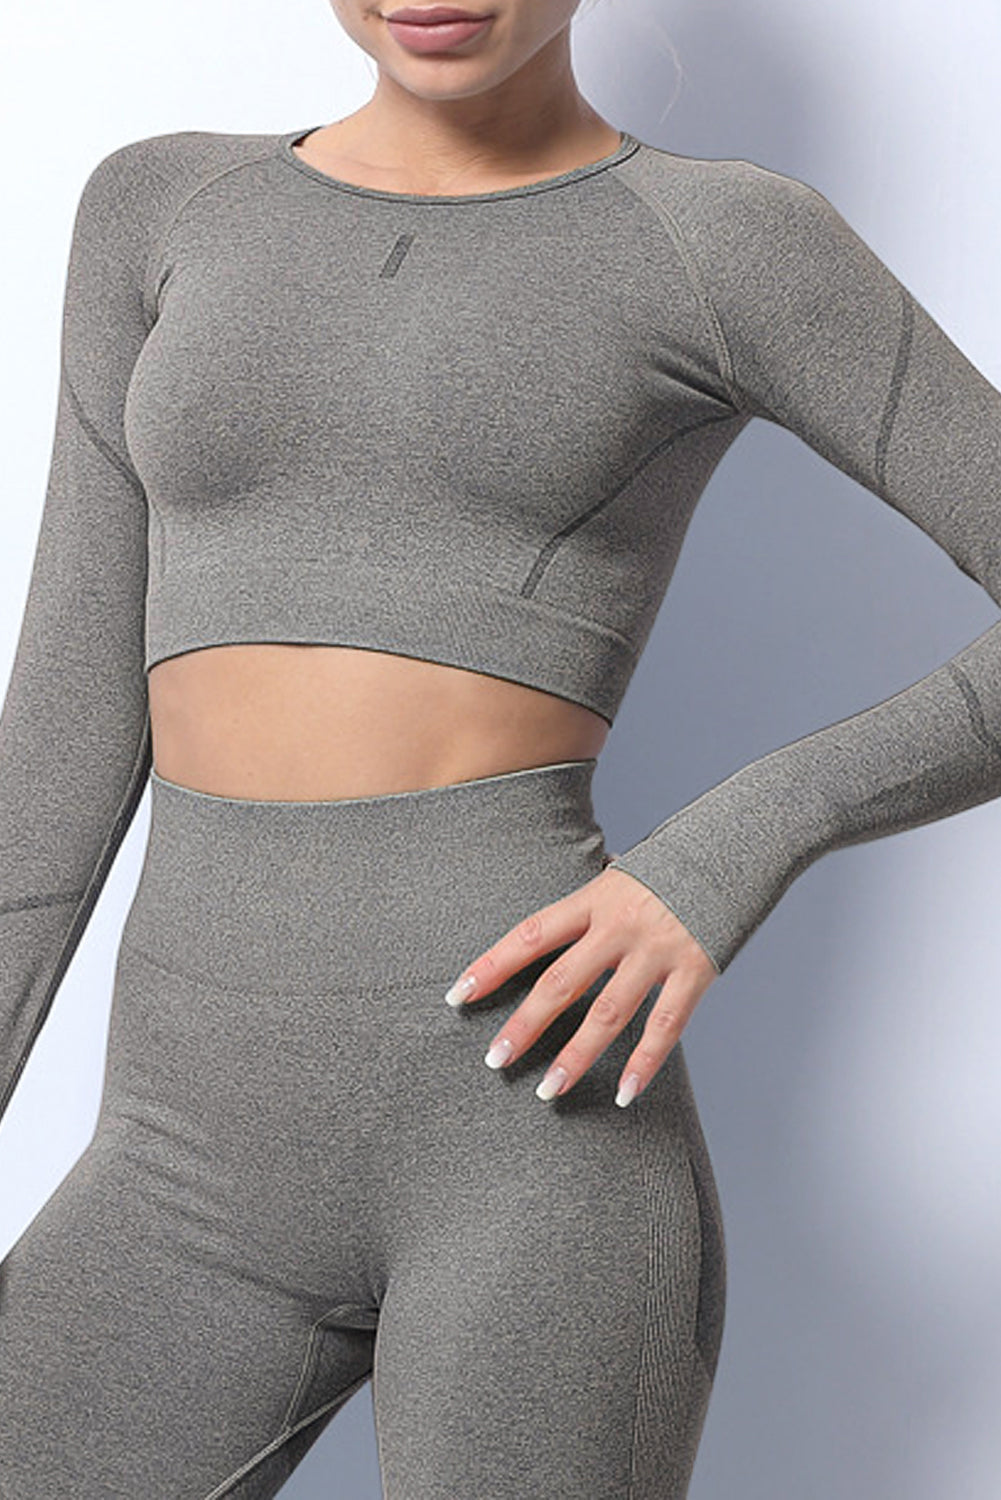 Gray Solid Color Long Sleeve Yoga Crop Top